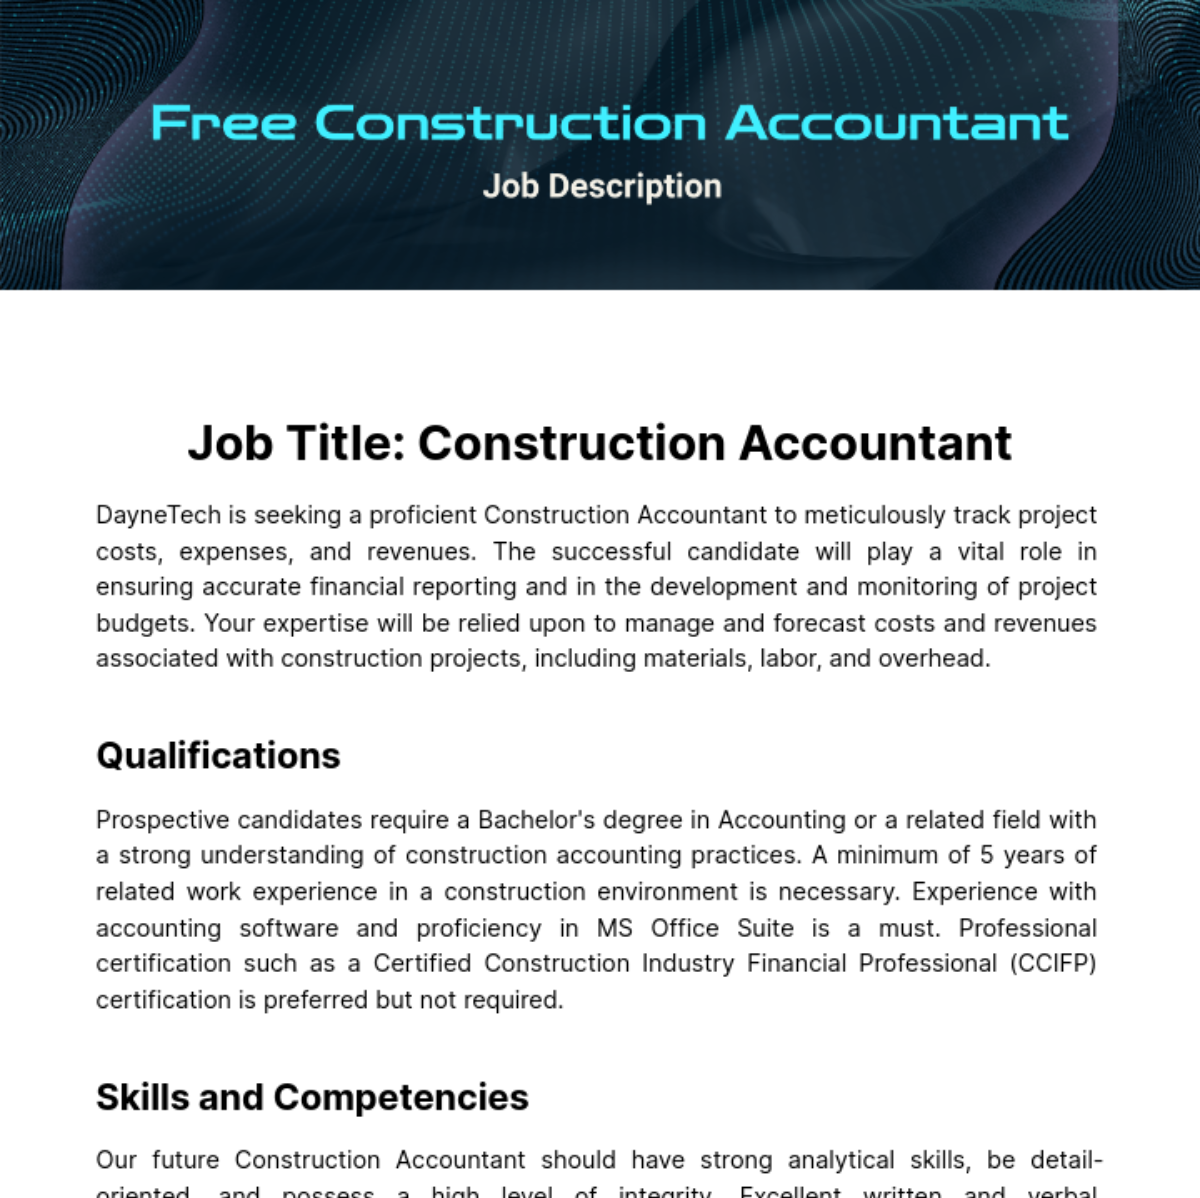 Free Construction Accountant Job Description Template